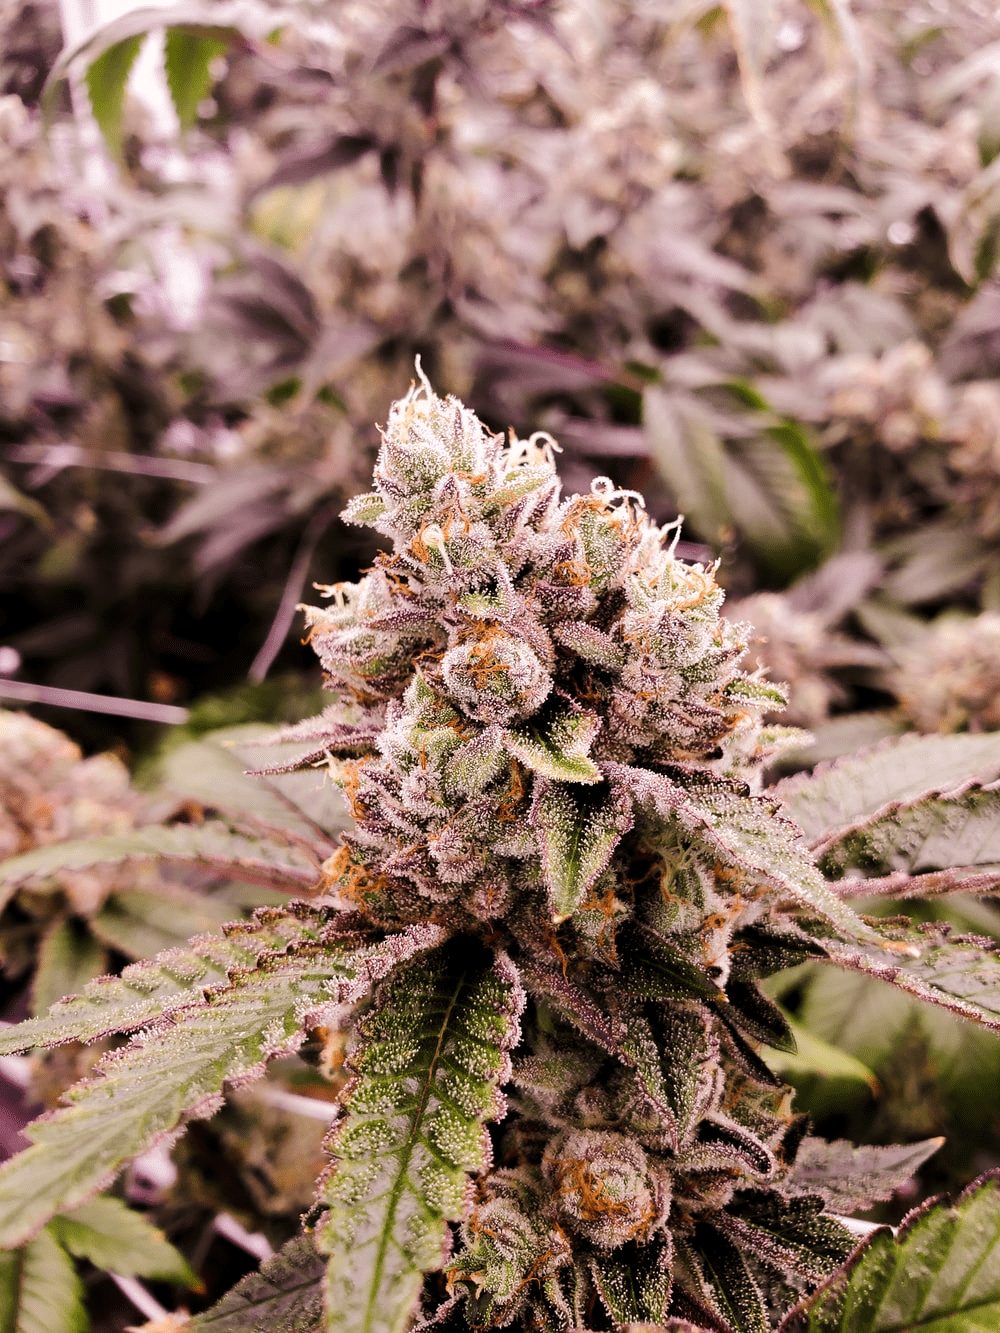 A marijuana flower bud